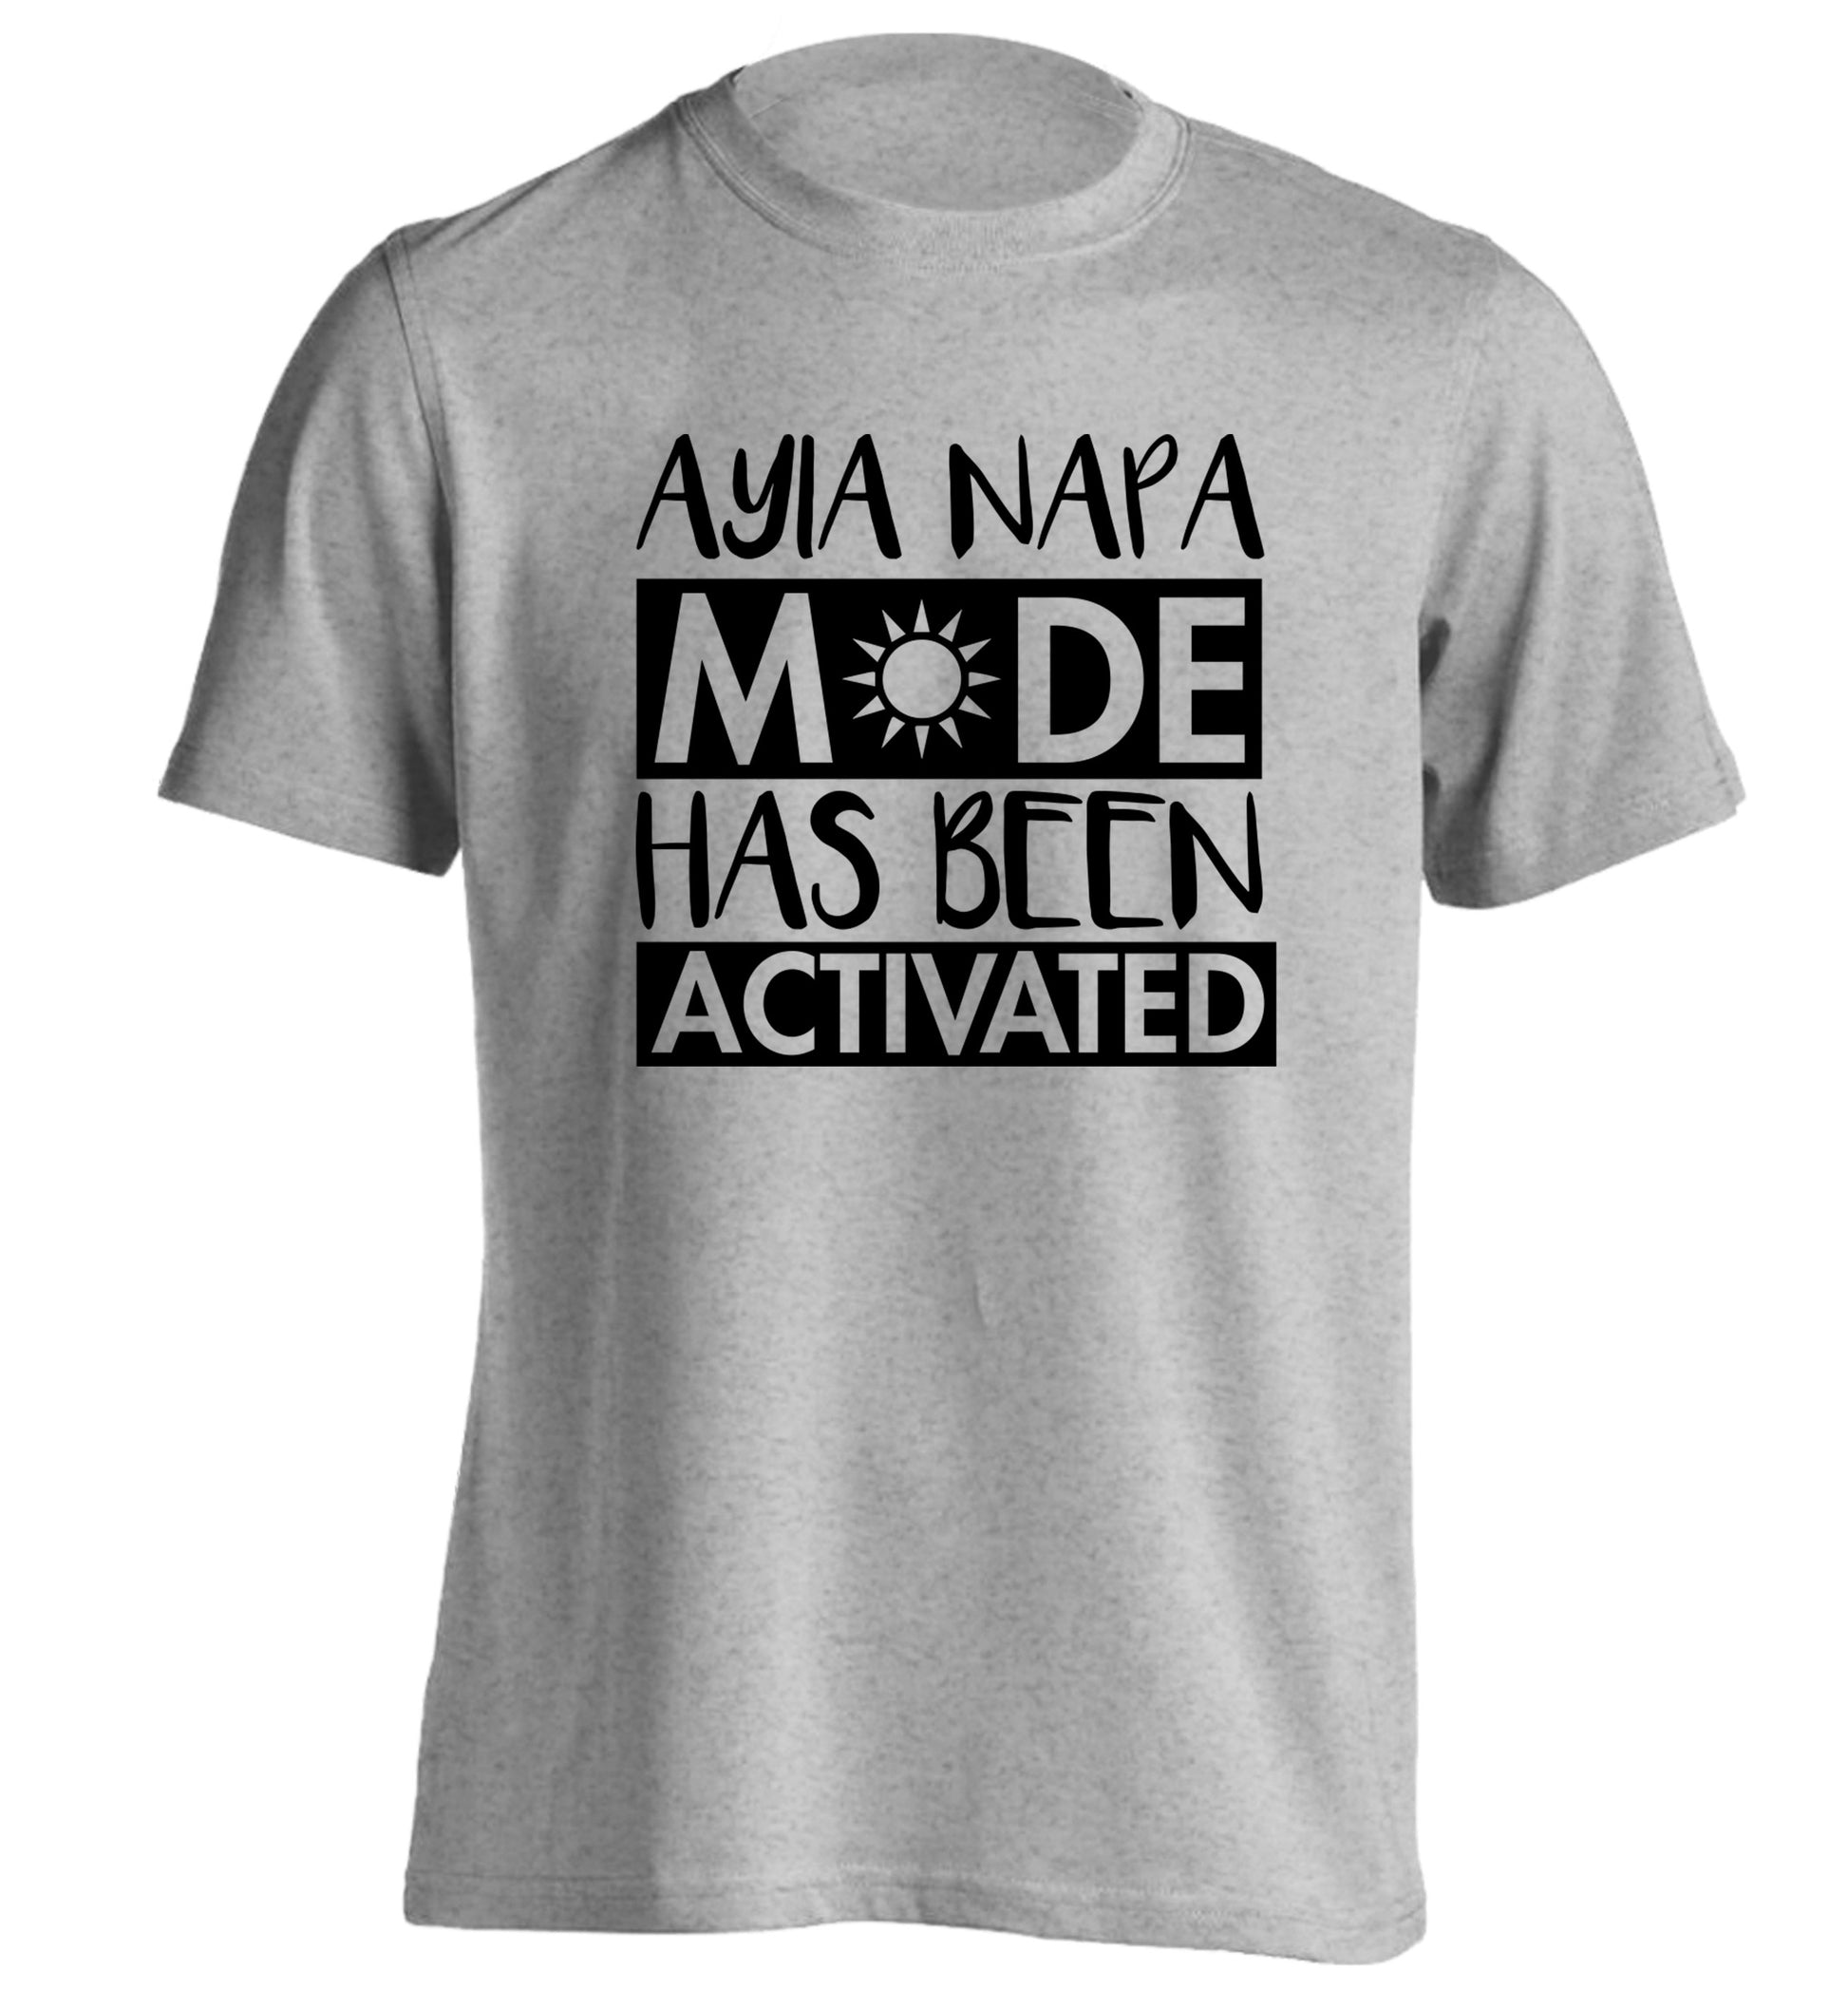 Aiya Napa mode has been activated adults unisex grey Tshirt 2XL